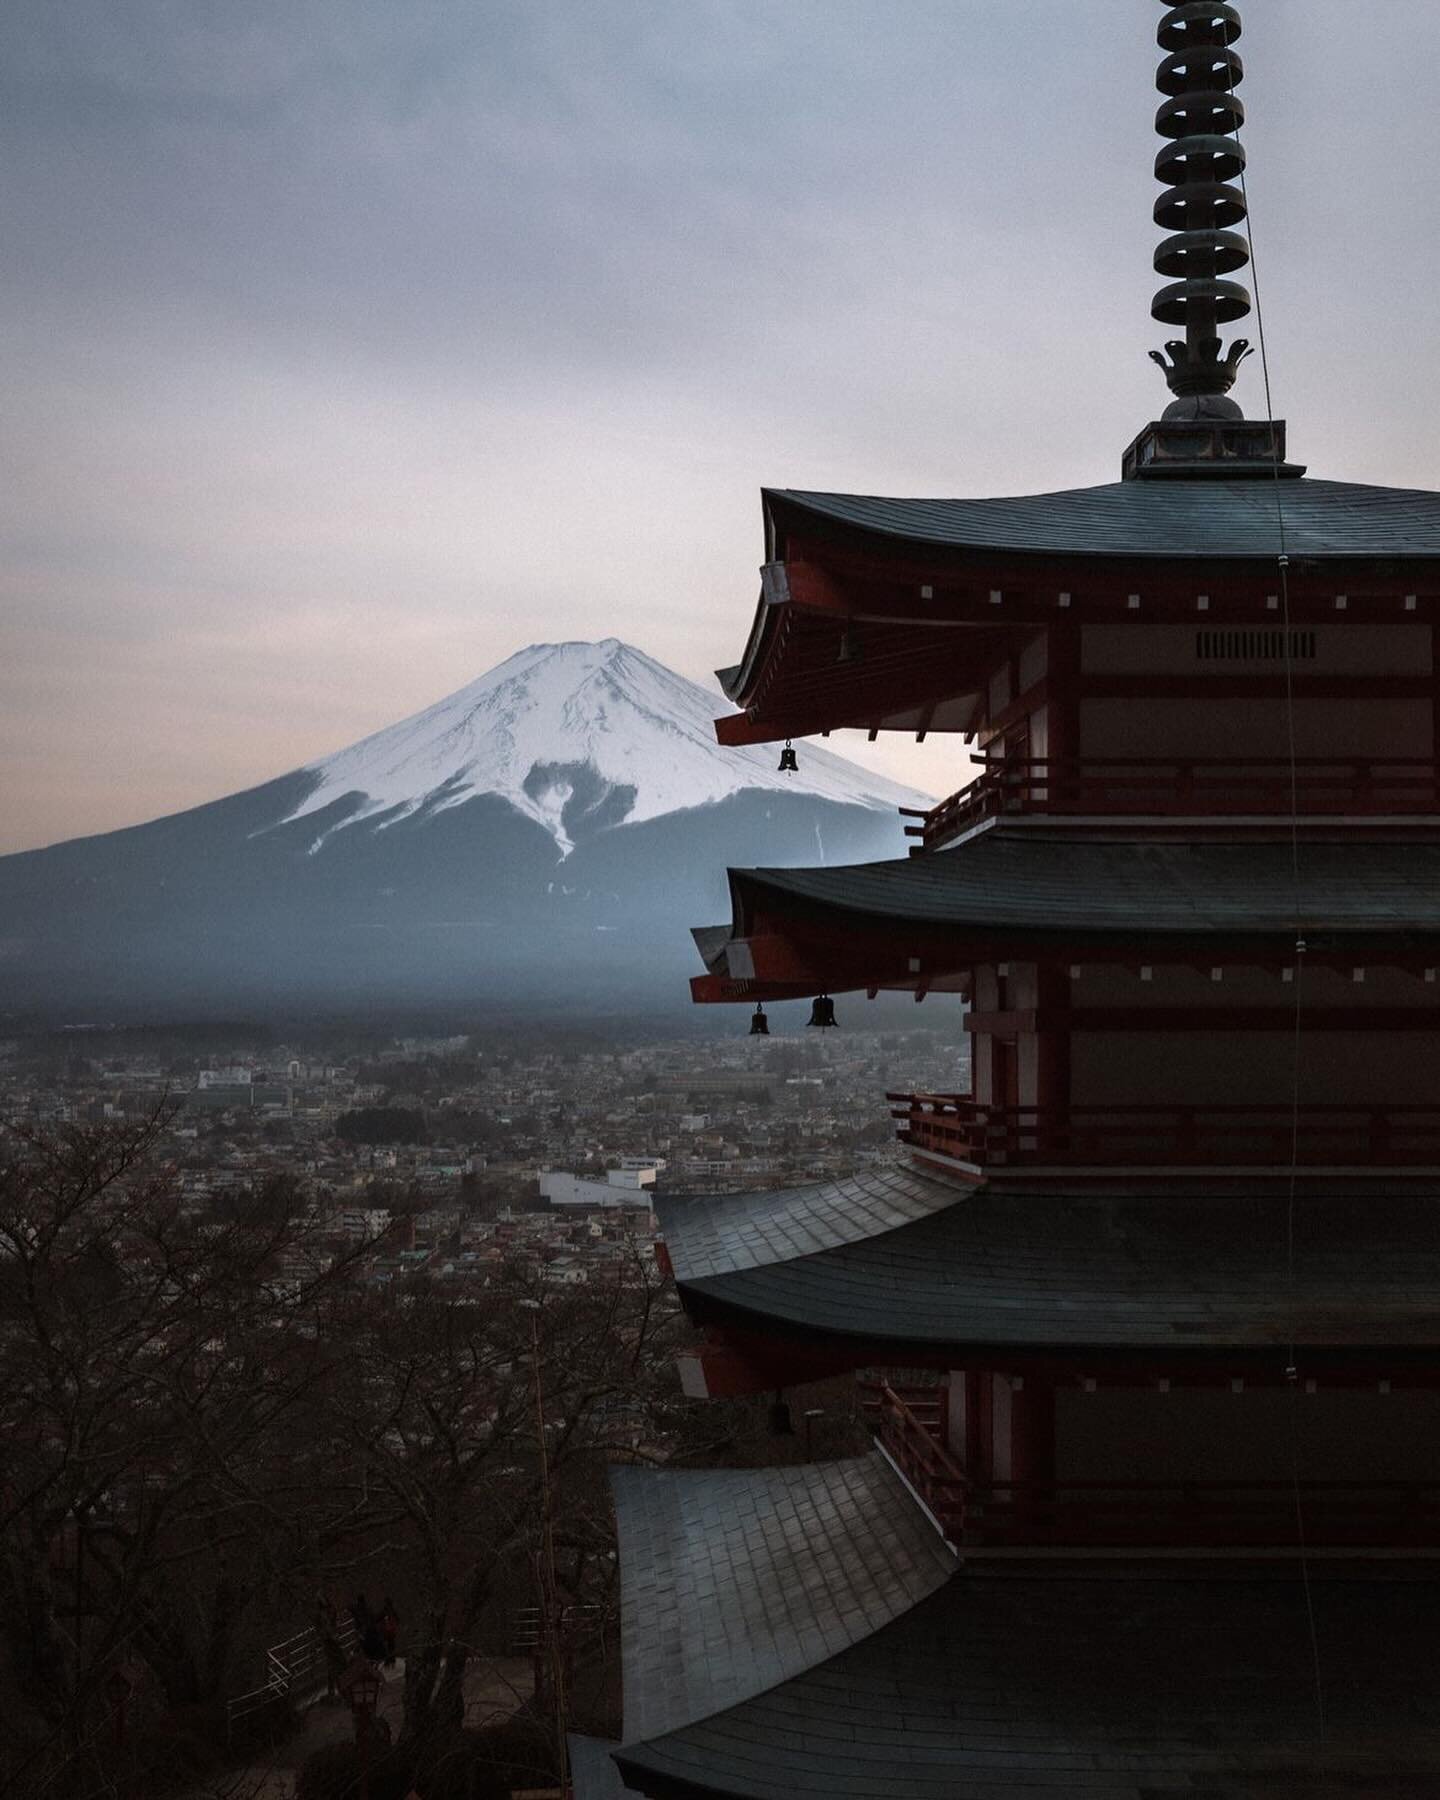 A whole world awaits #digitalnomad Mt. Fuji ( credit - @igi_kyo )